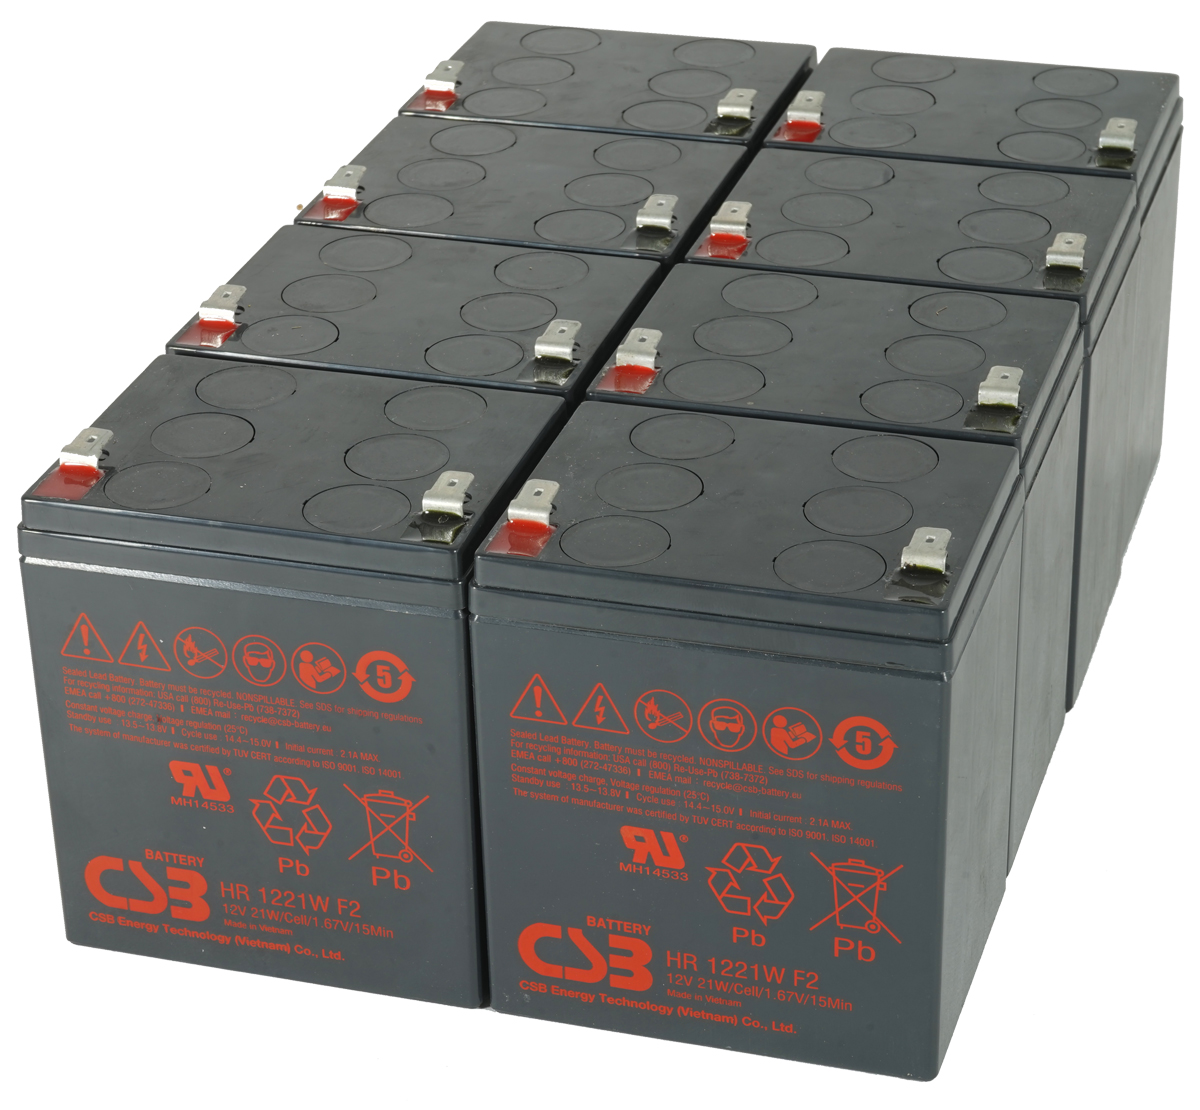 MDS68783 UPS Battery Kit for MGE / Eaton UPS